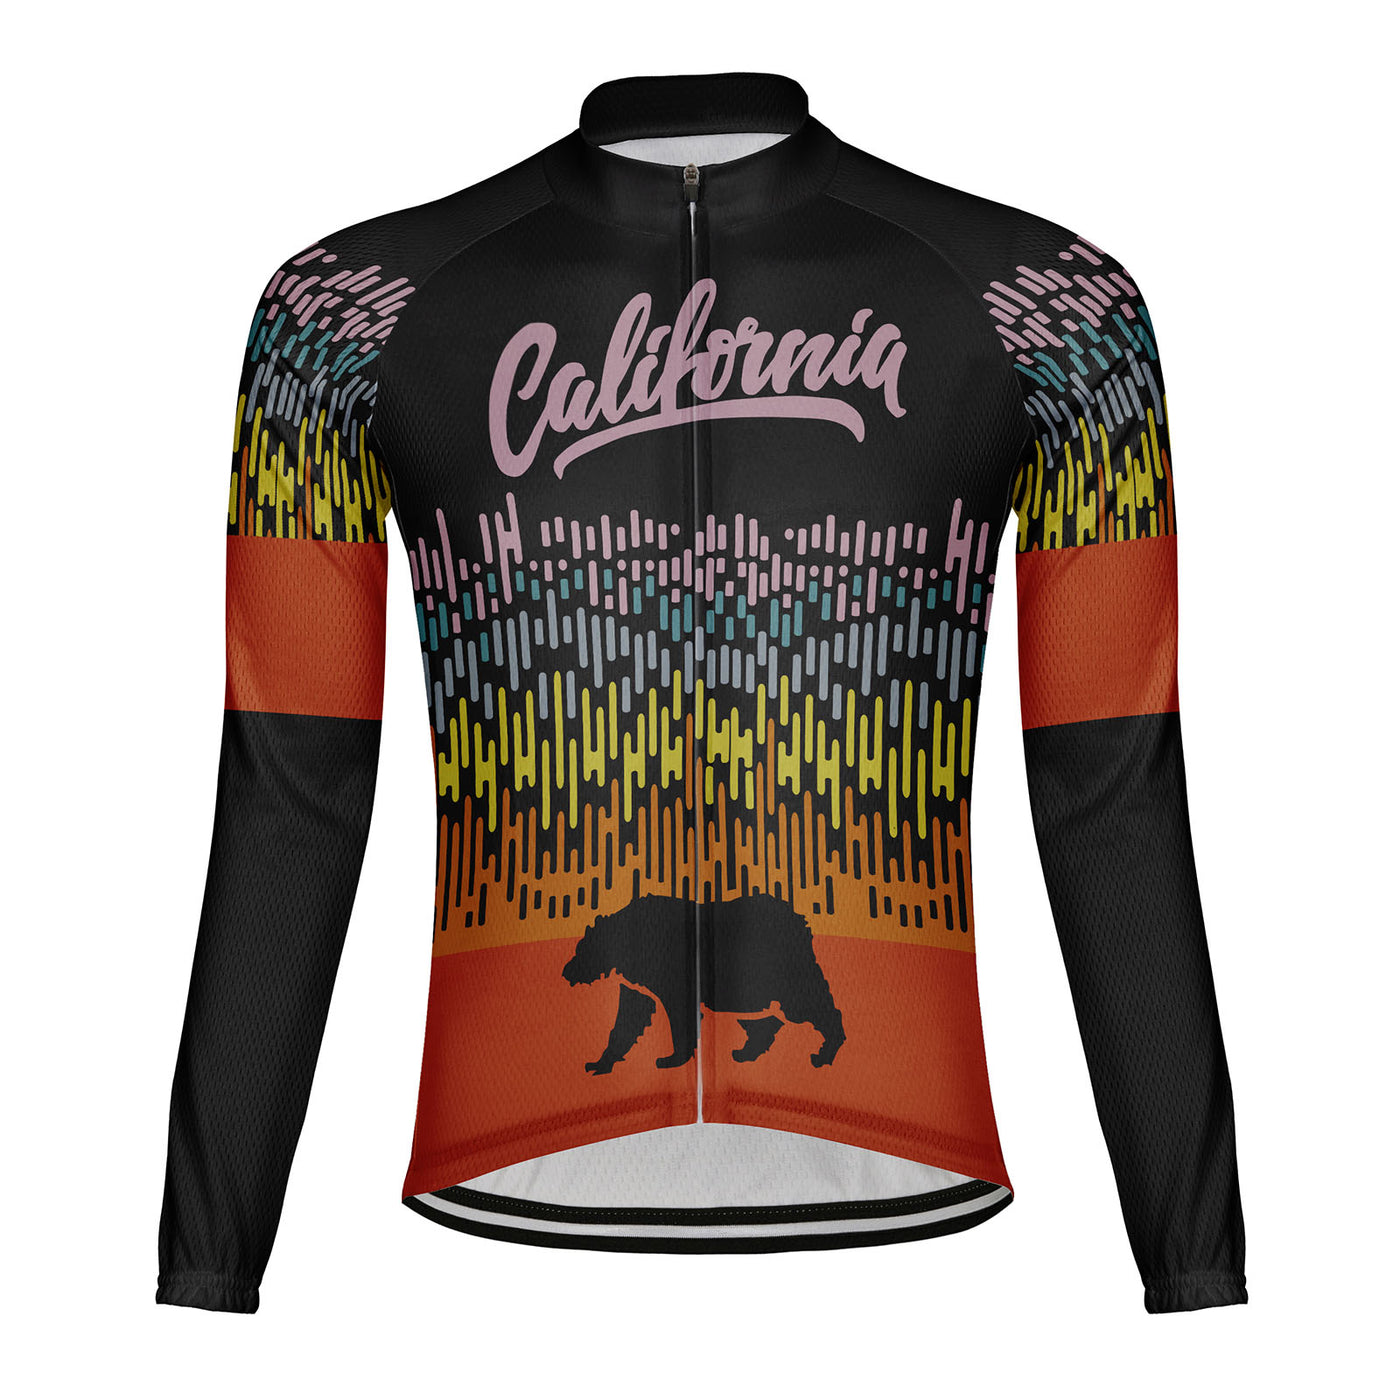 Customized California Men's Cycling Jersey Long Sleeve